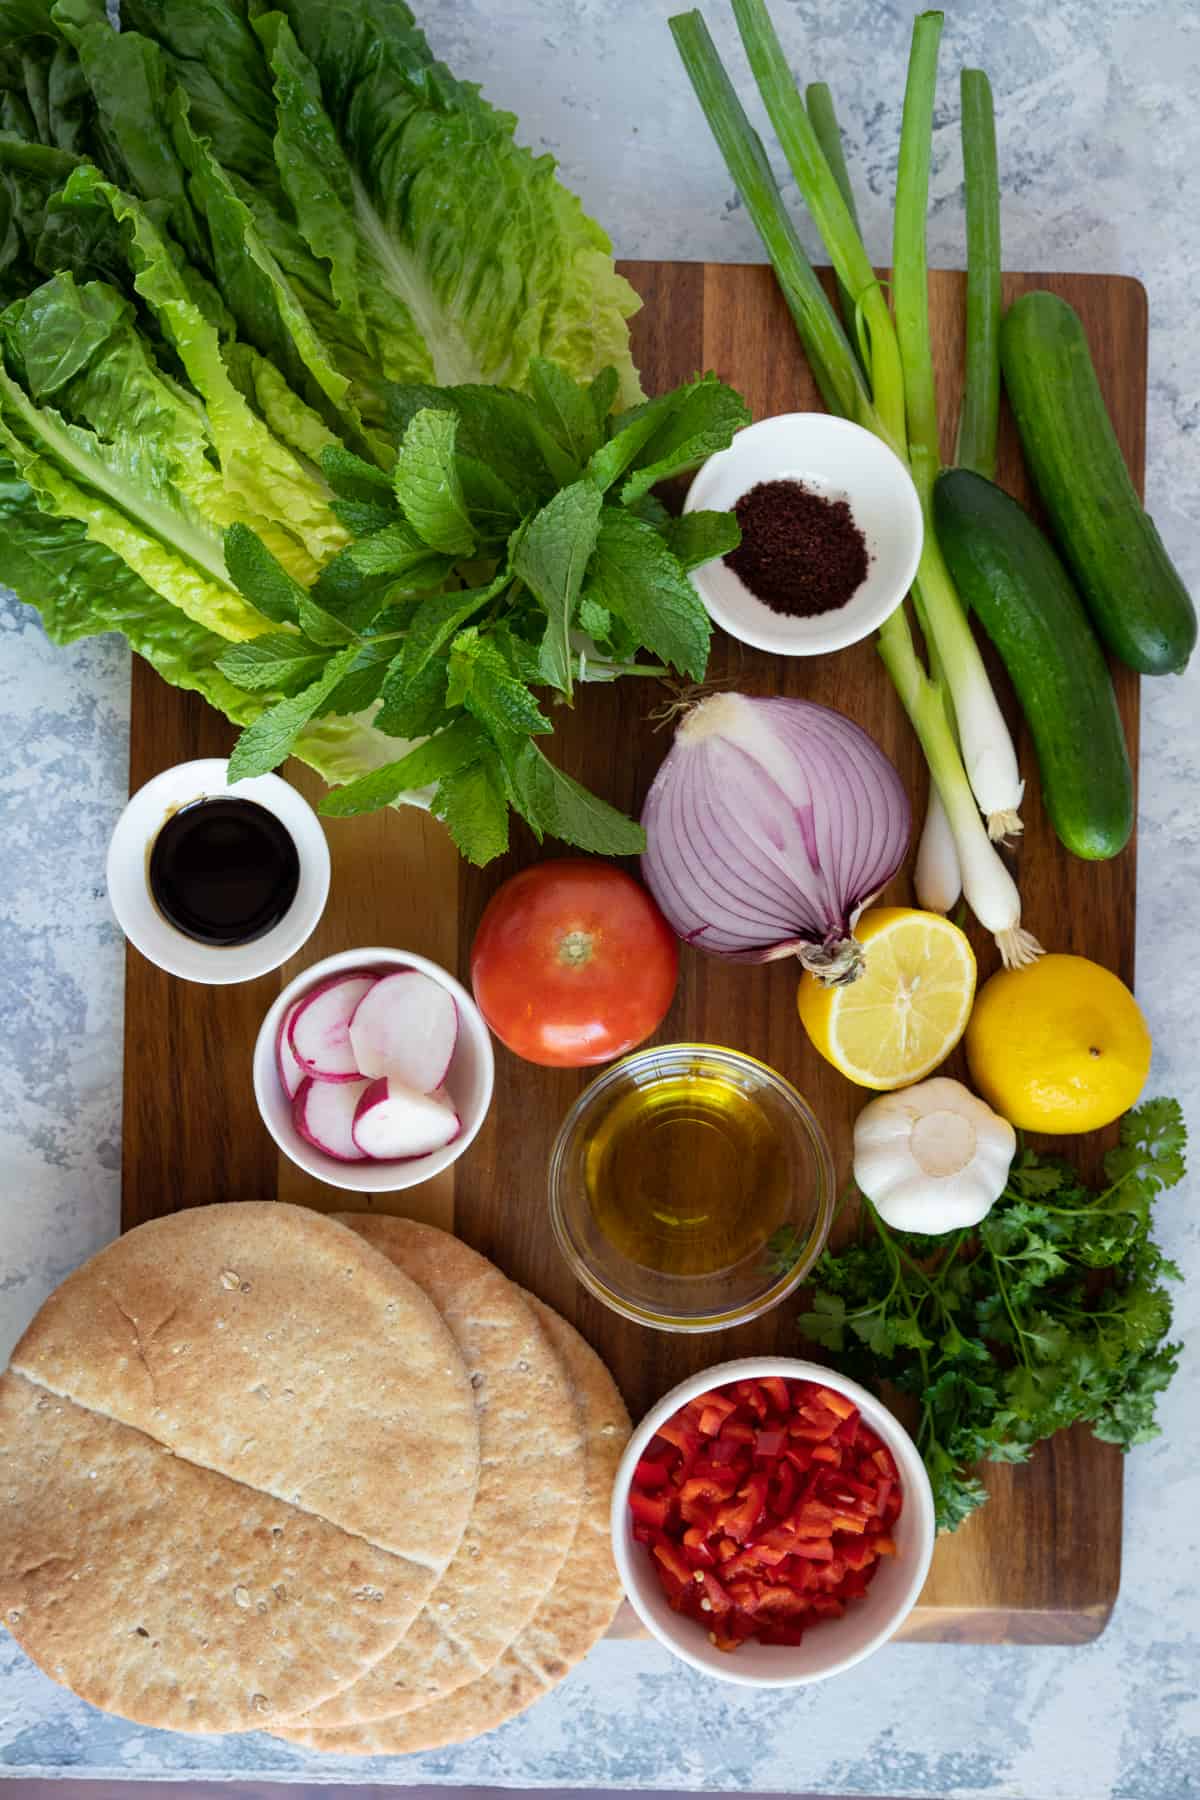 Lebanese salad ingredients are lettuce, radishes, tomatoes, lime, onion, sumac and parsley.